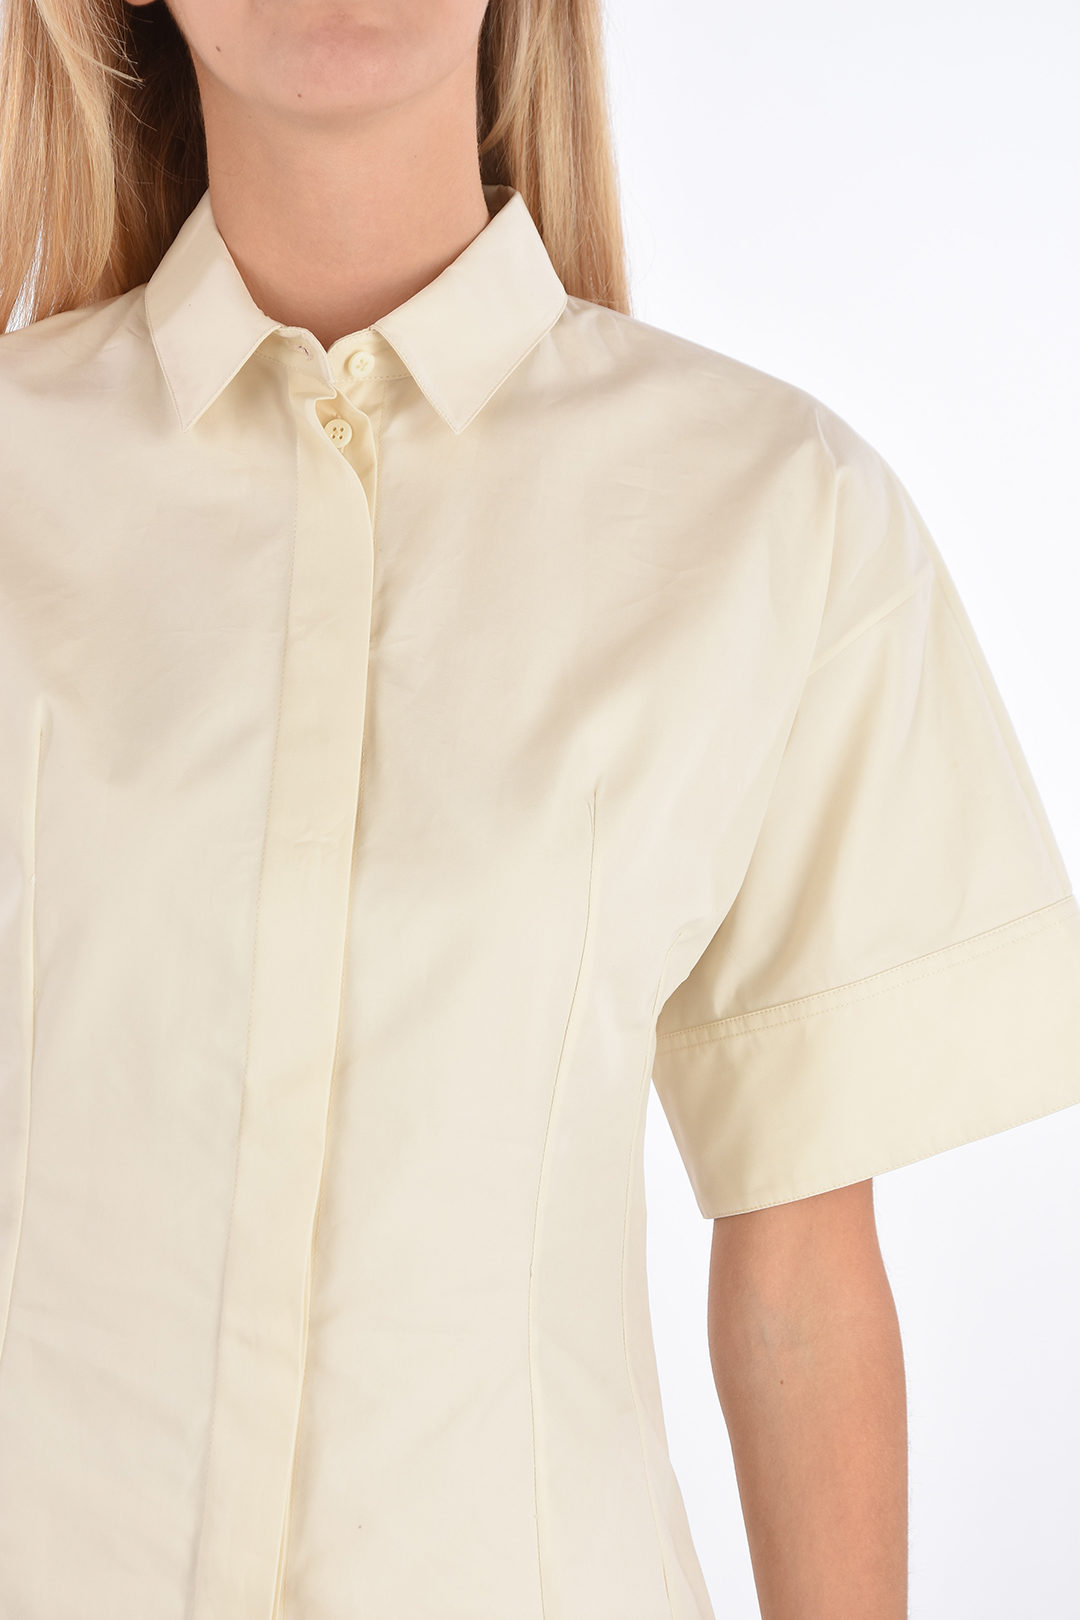 Cotton LUZ Short Sleeve Shirt